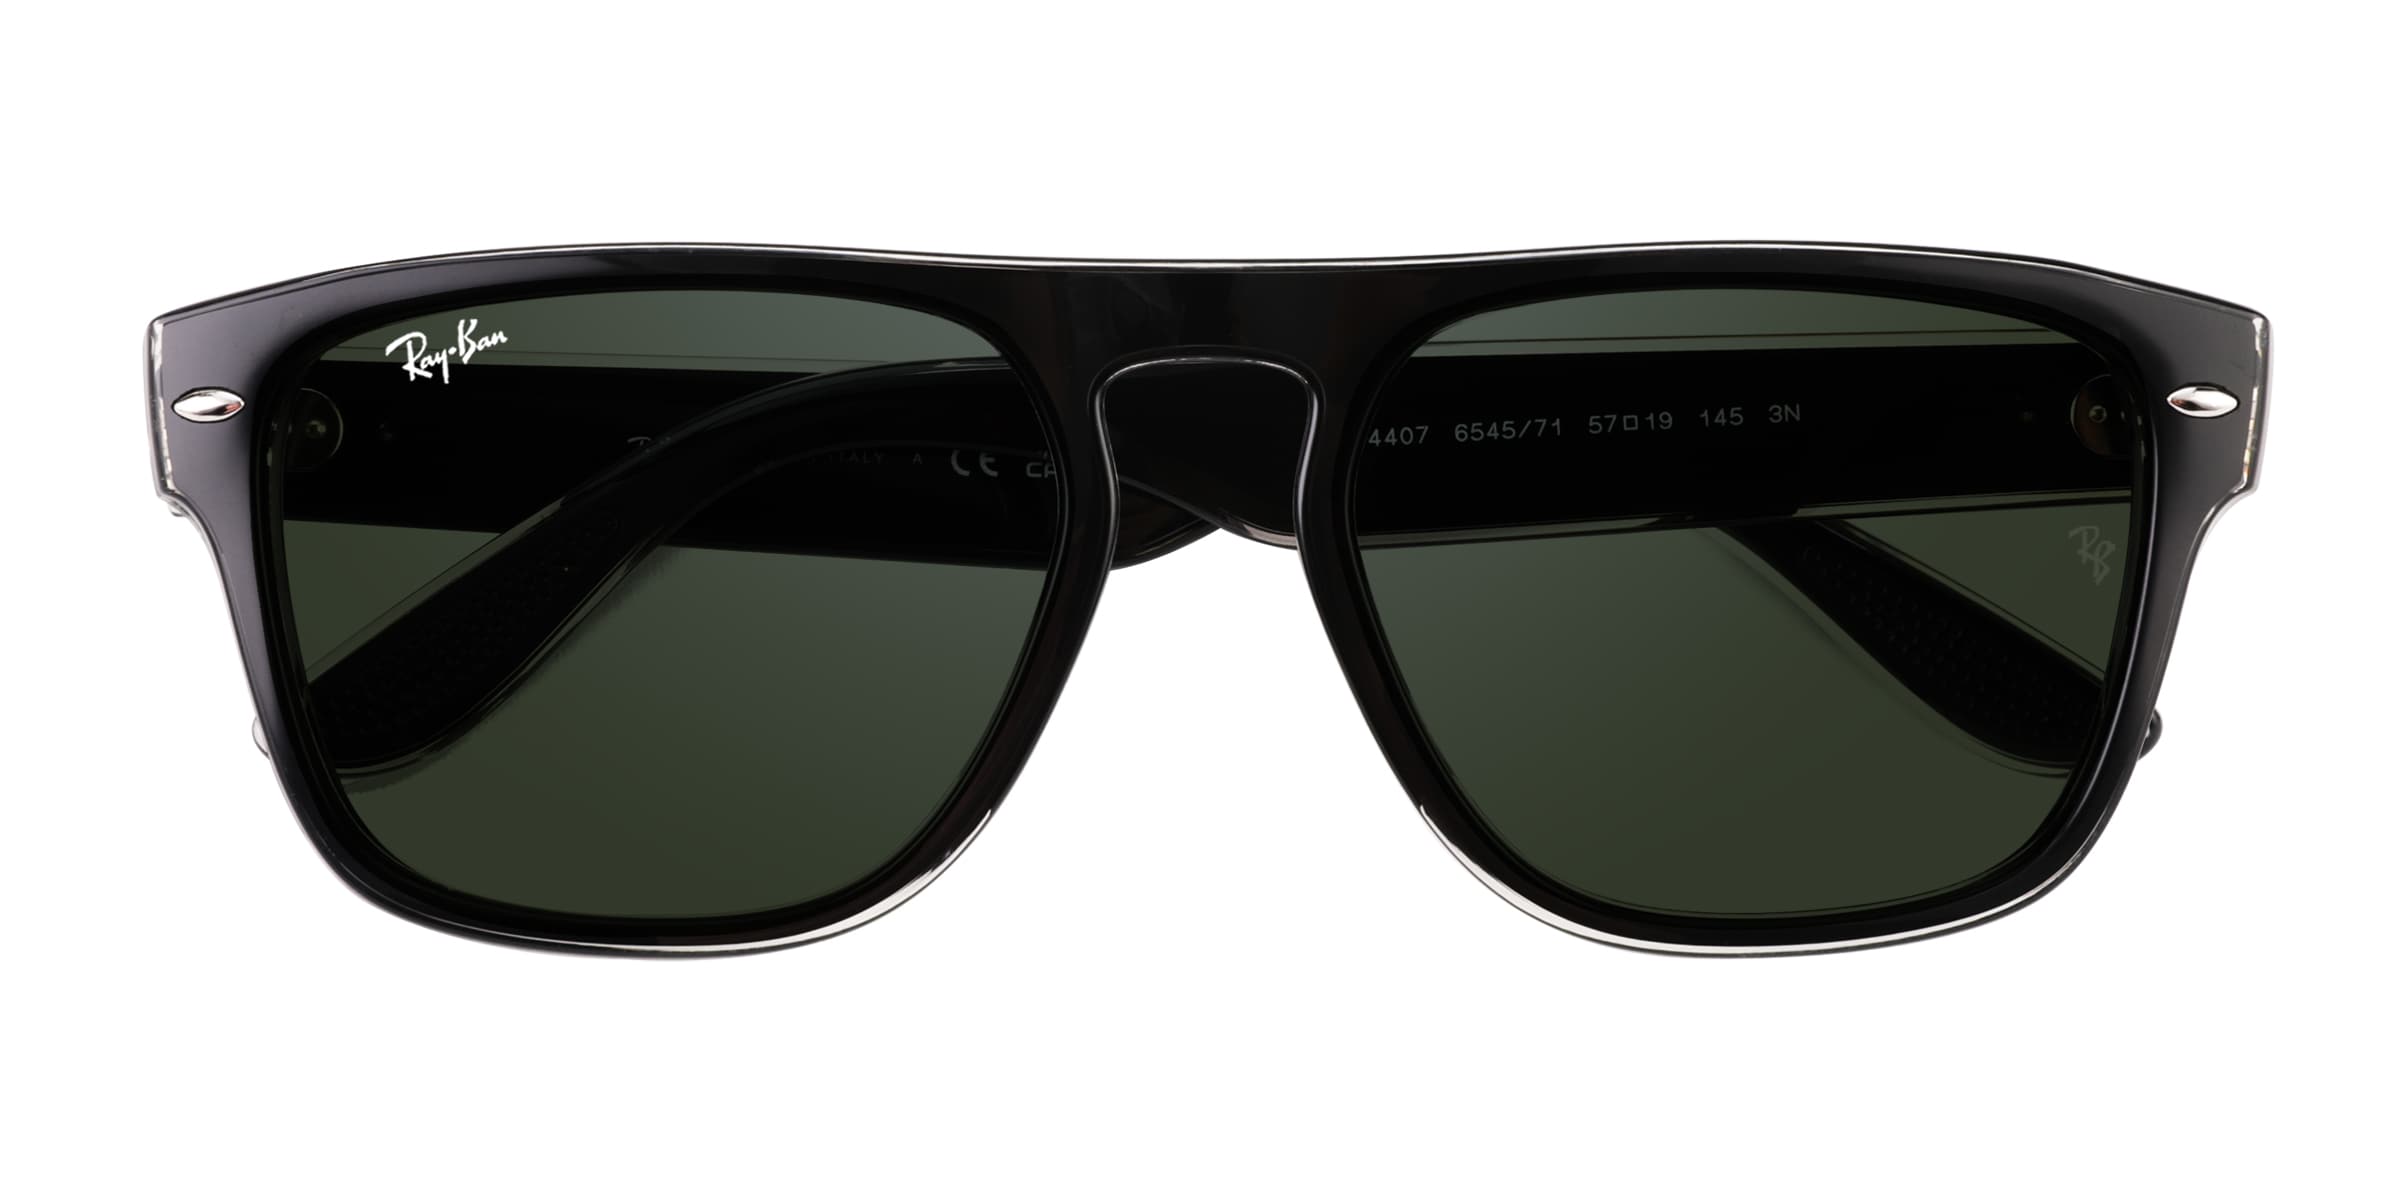 Ray-Ban Wayfarer - RB 2140 - genuine made in italy -sunglasses | eBay